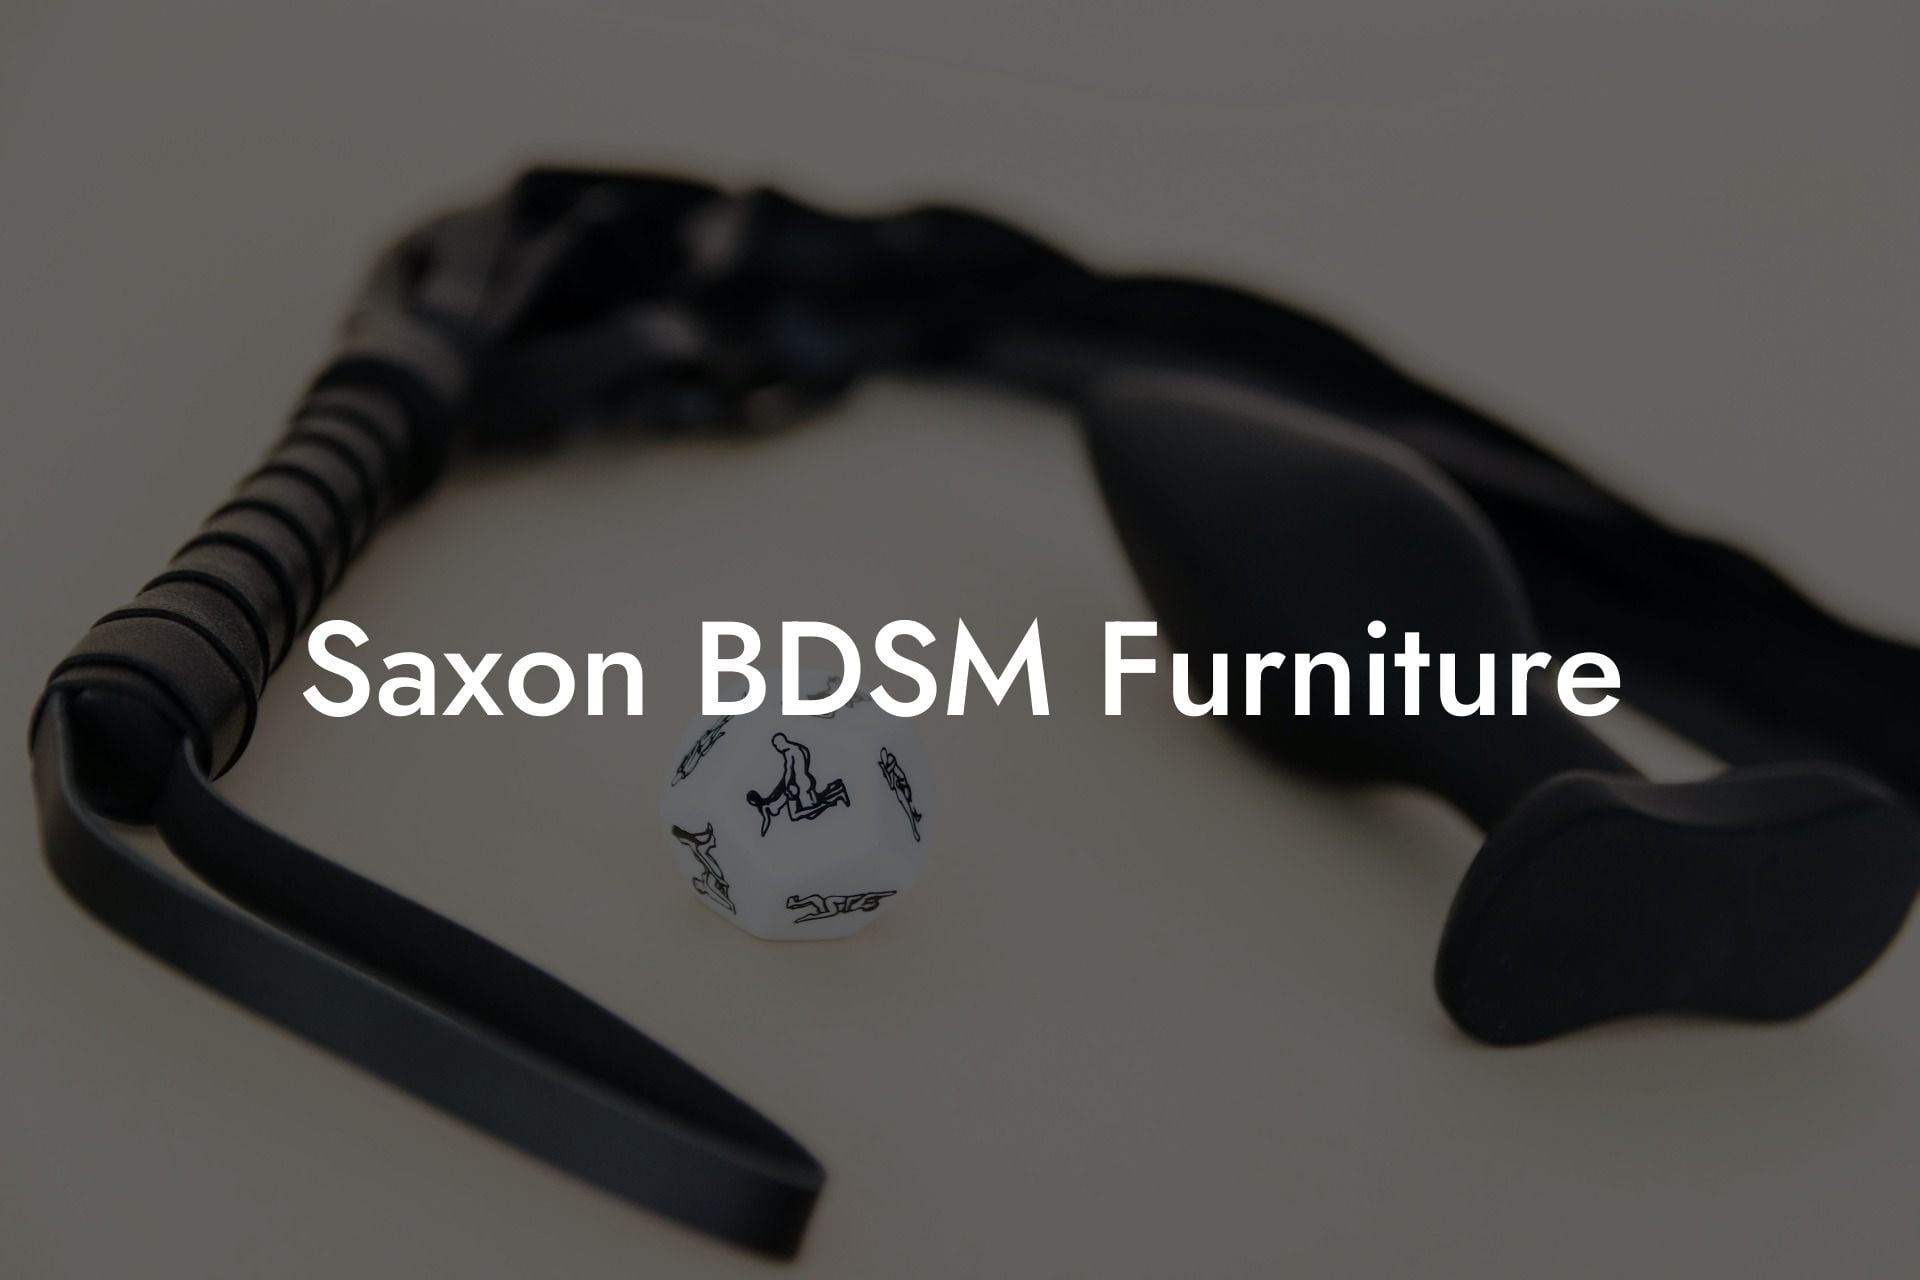 Saxon BDSM Furniture